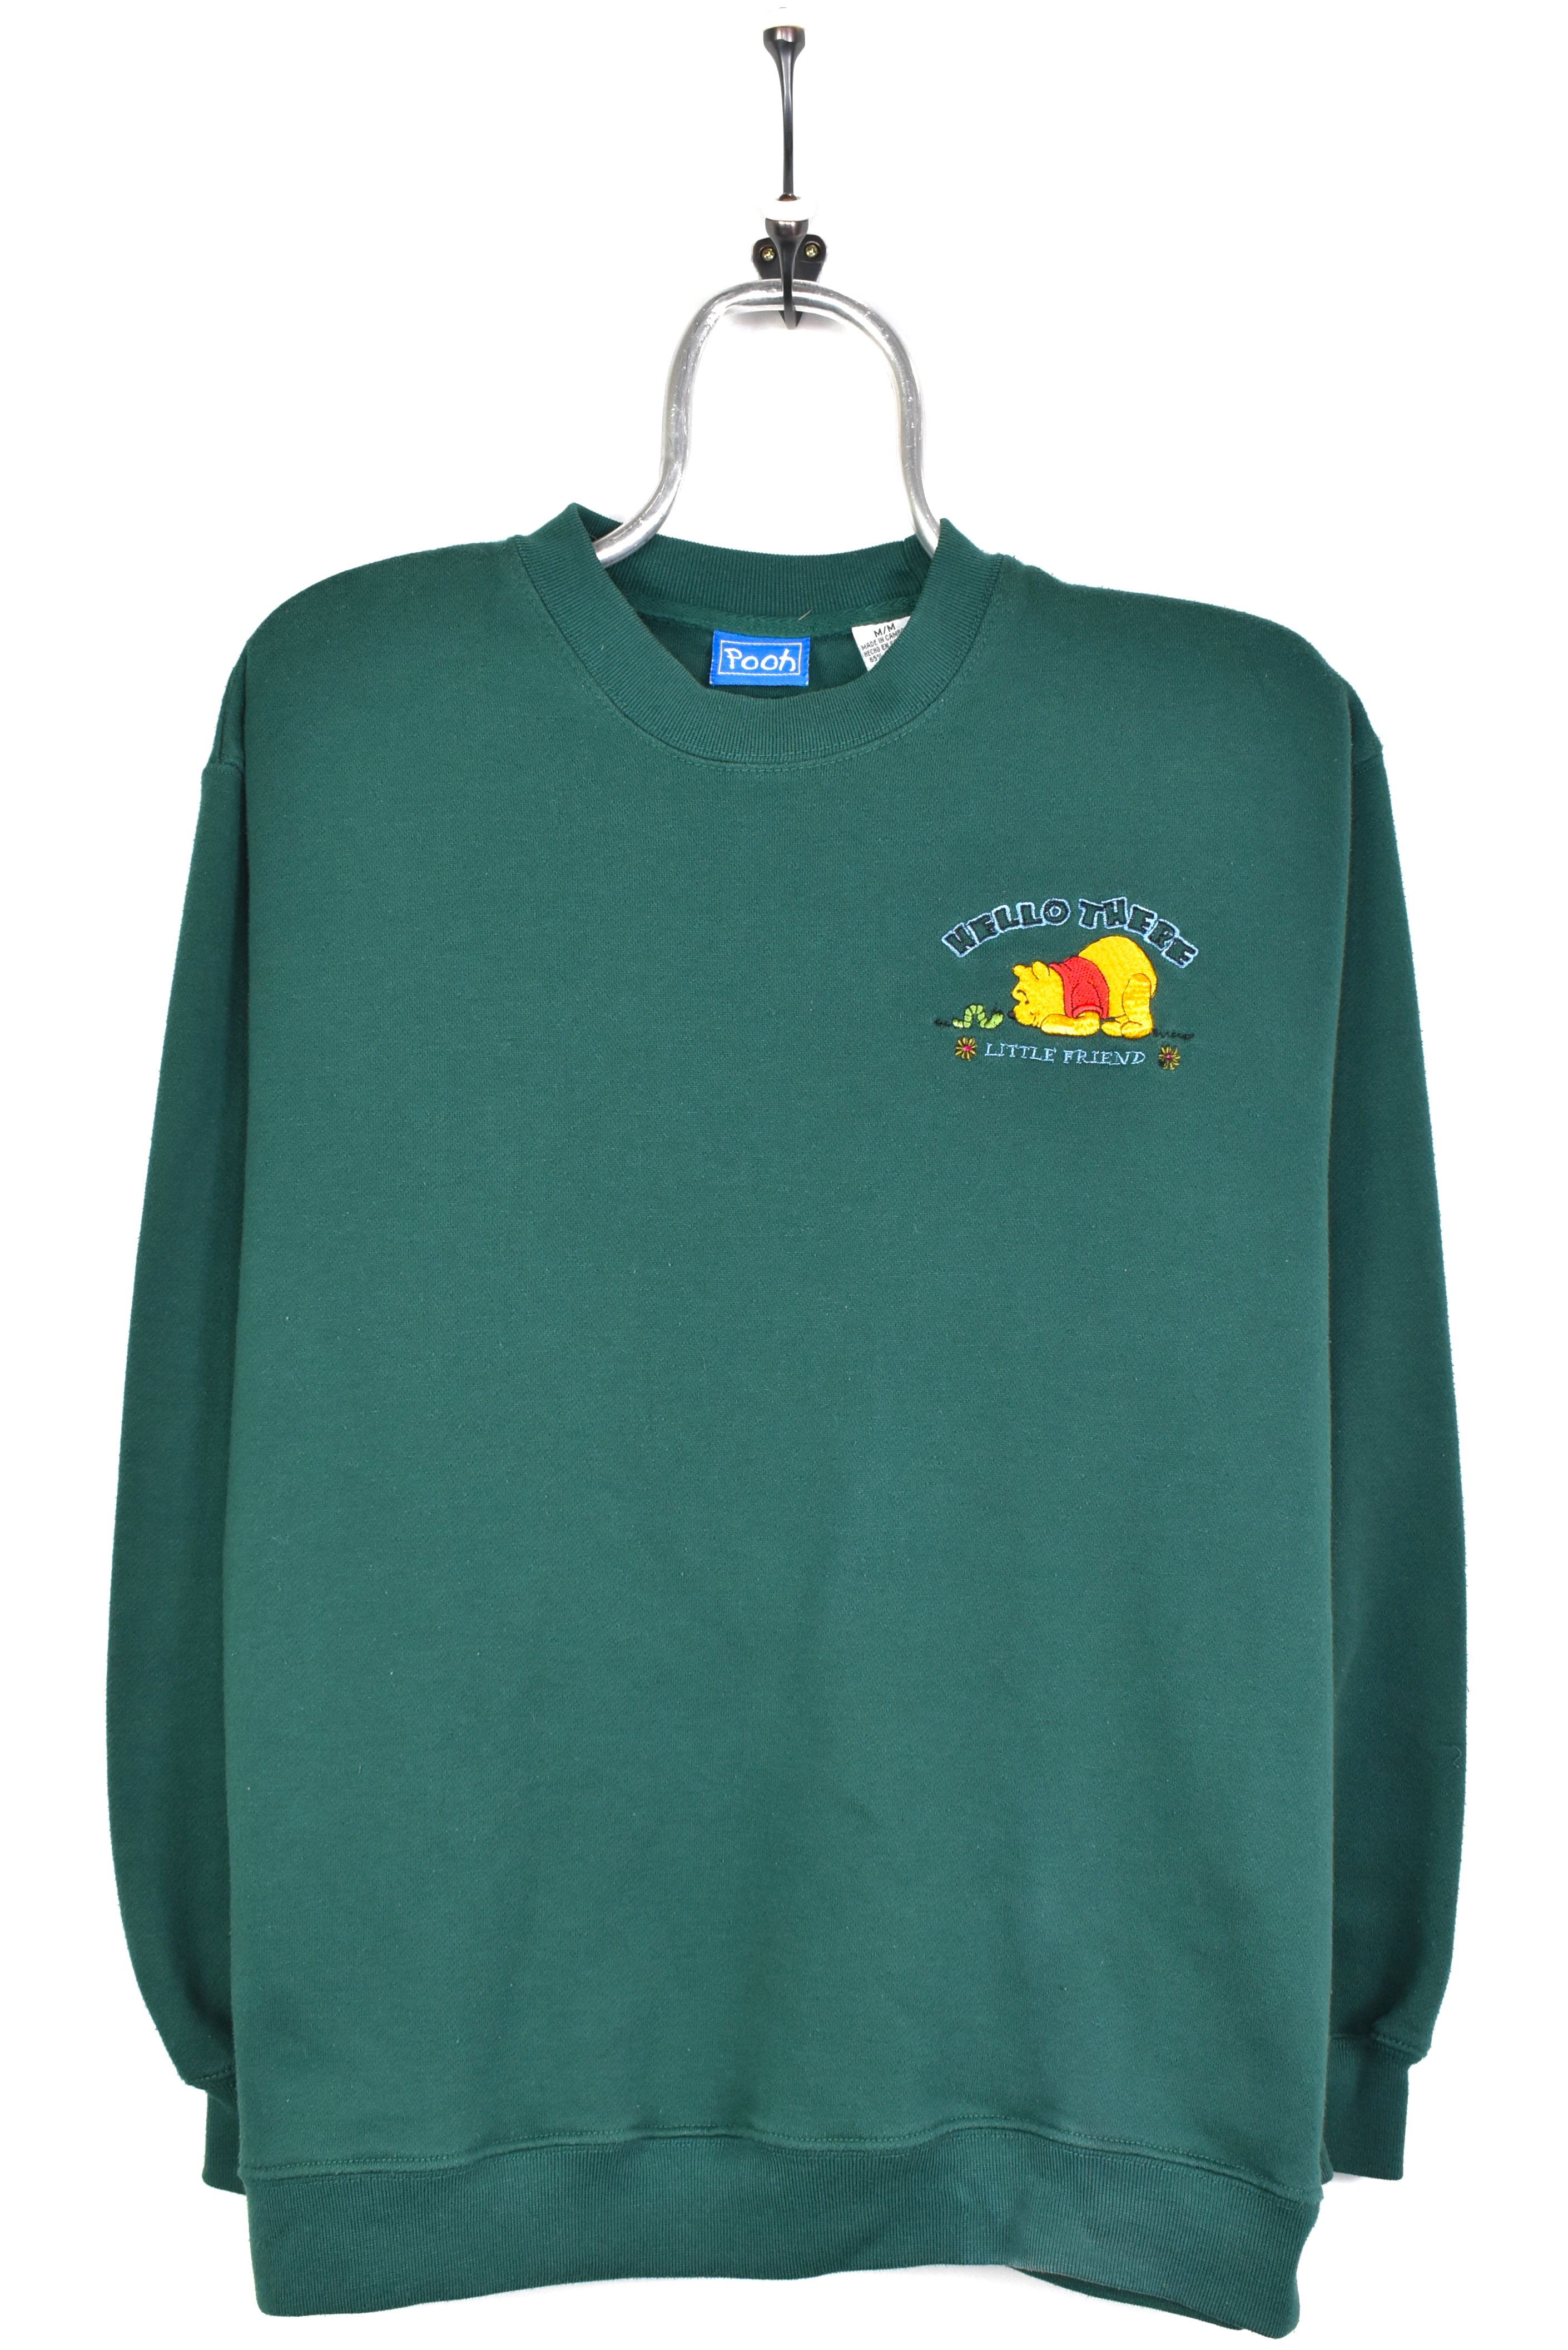 Vintage Disney Pooh embroidered green sweatshirt | Medium DISNEY / CARTOON